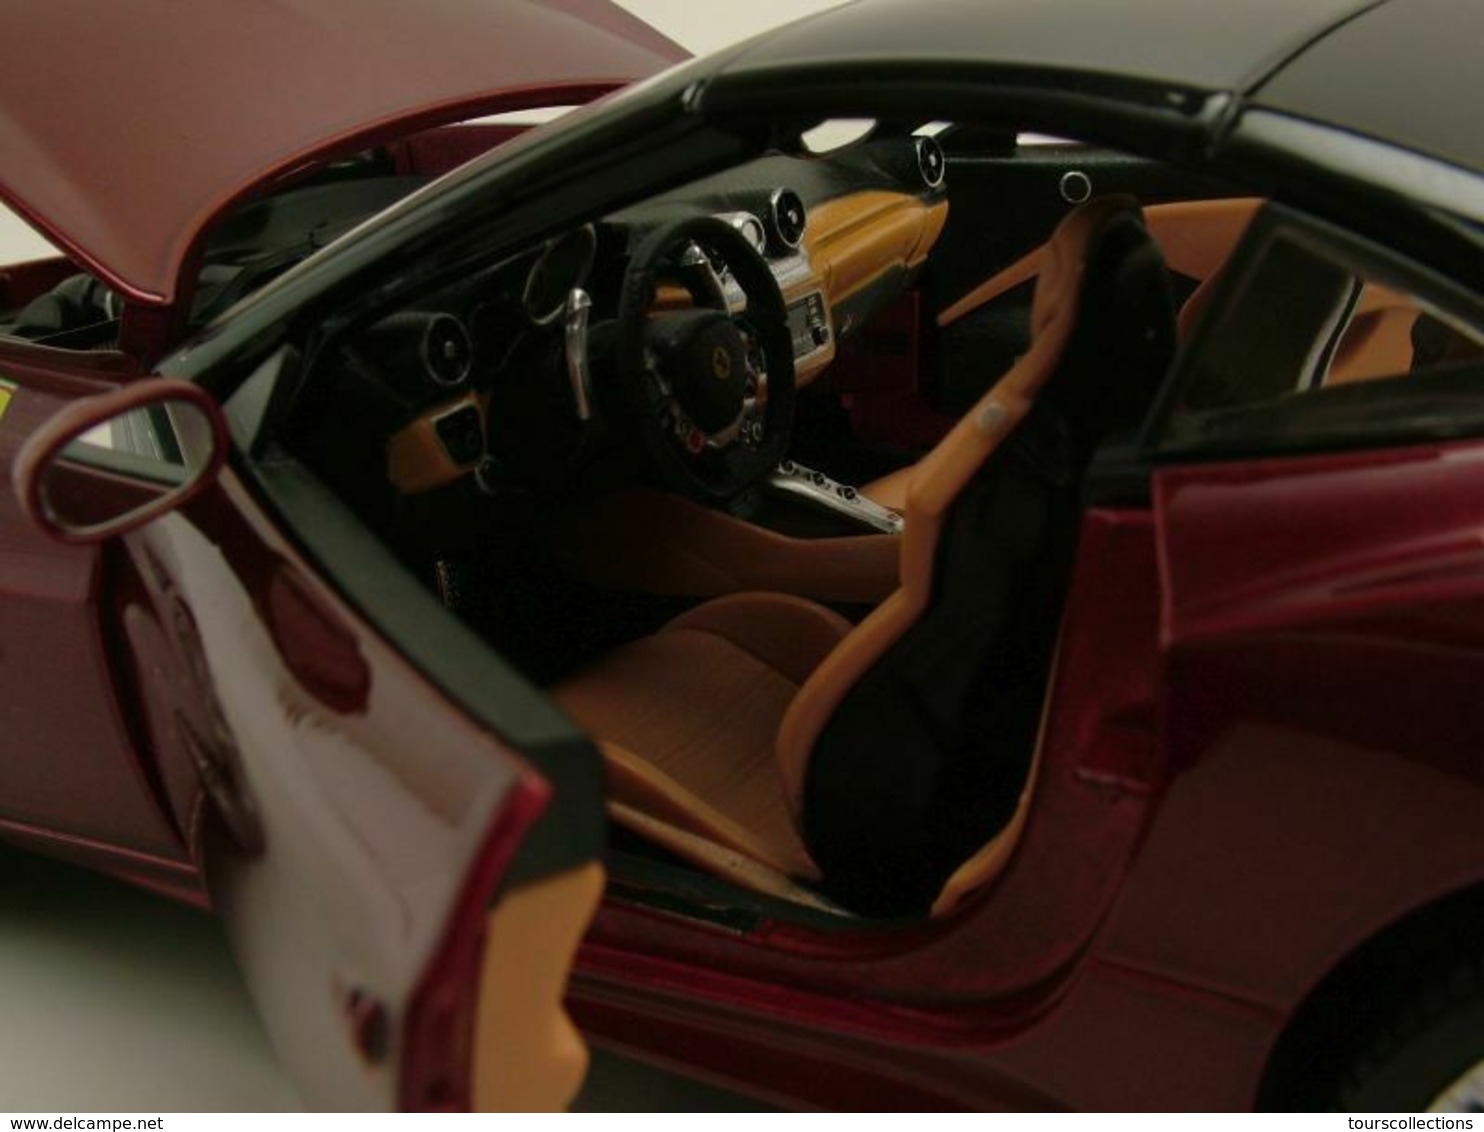 Ferrari California T rouge foncé toit fermé (version luxe de 2015) 1/18 Burago n° 16902